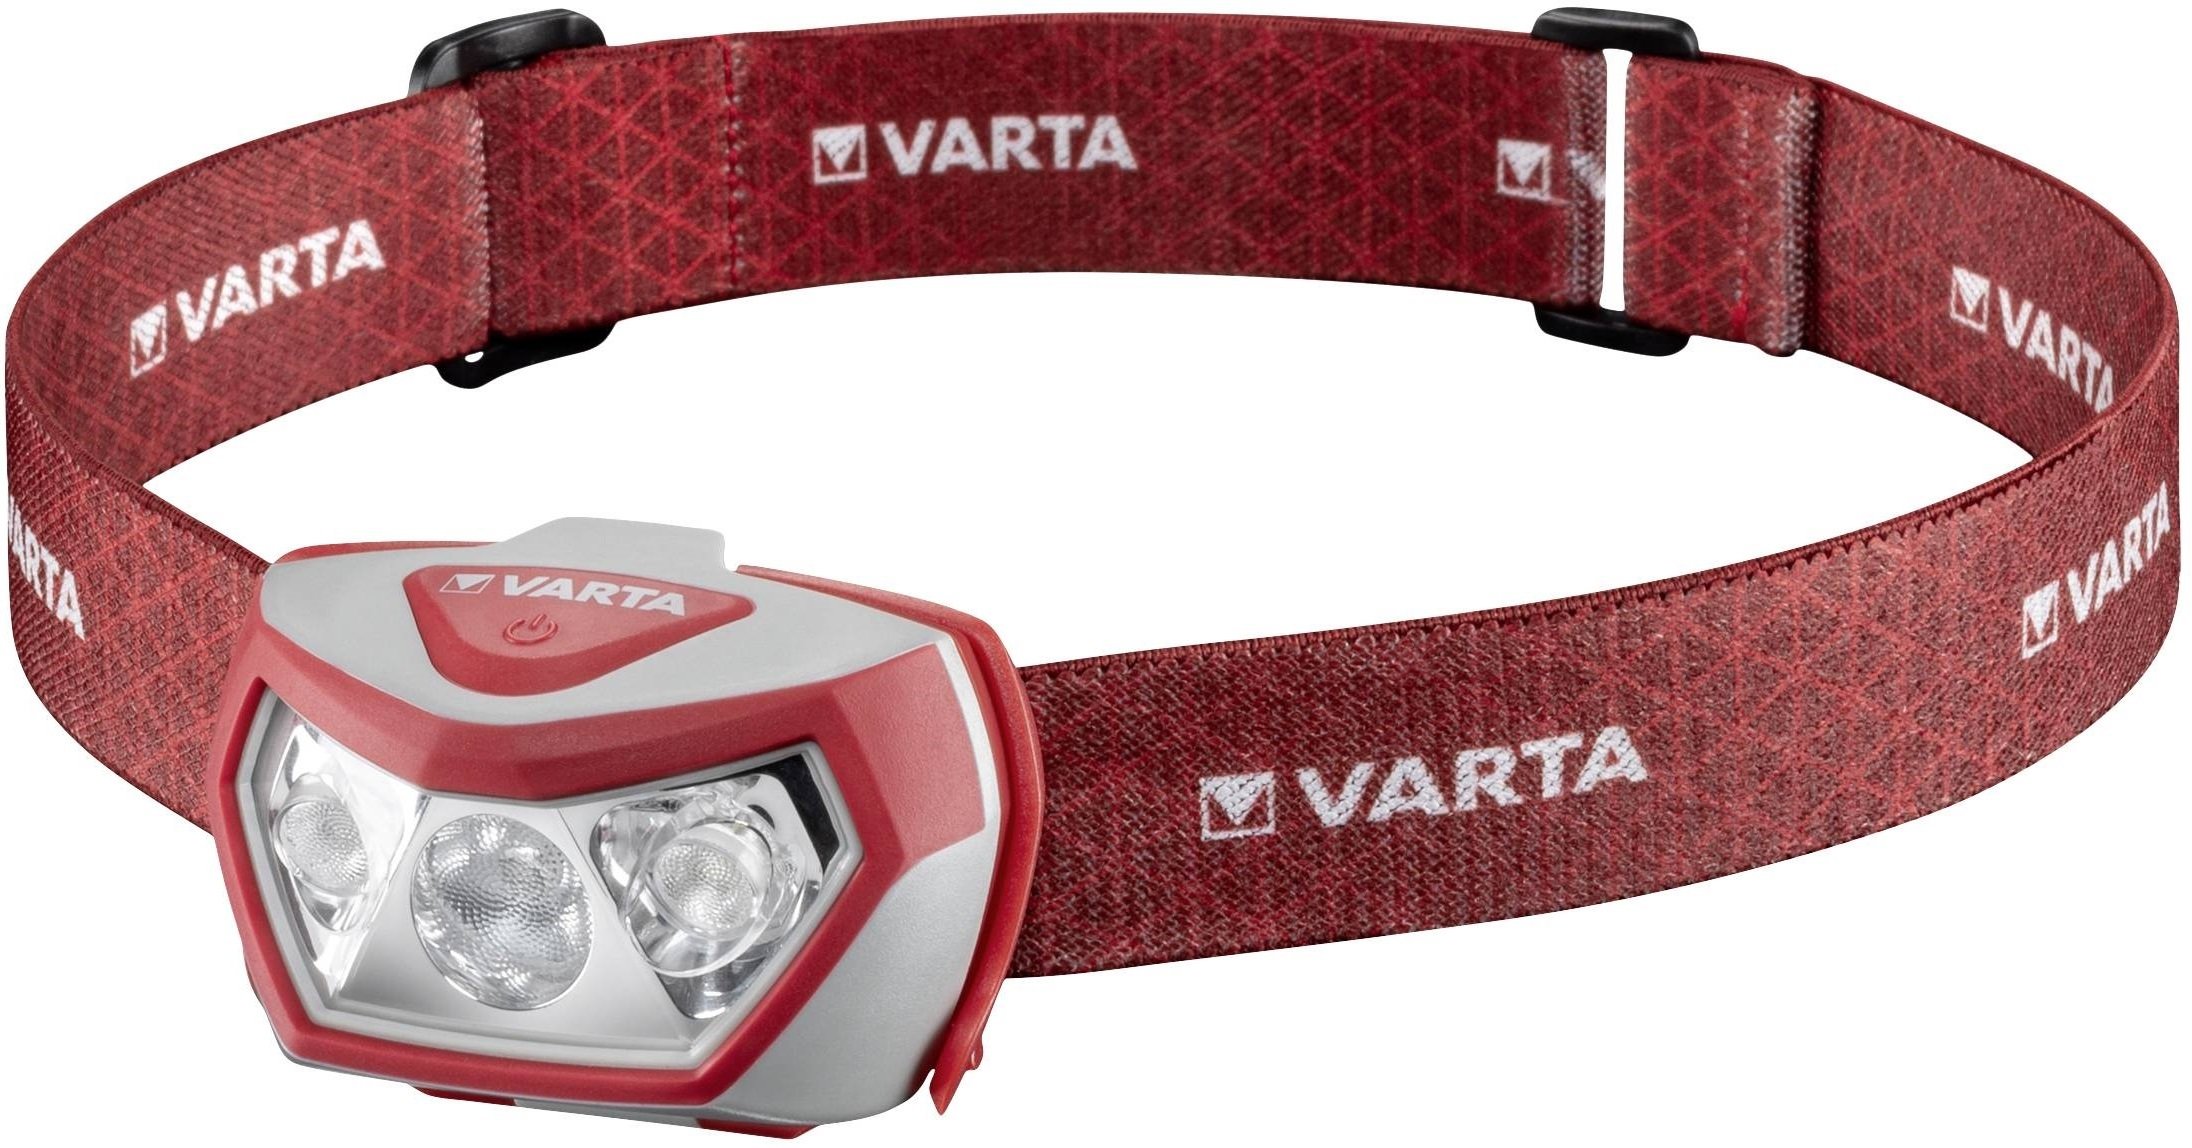 Varta Outdoor Sports H20 Pro